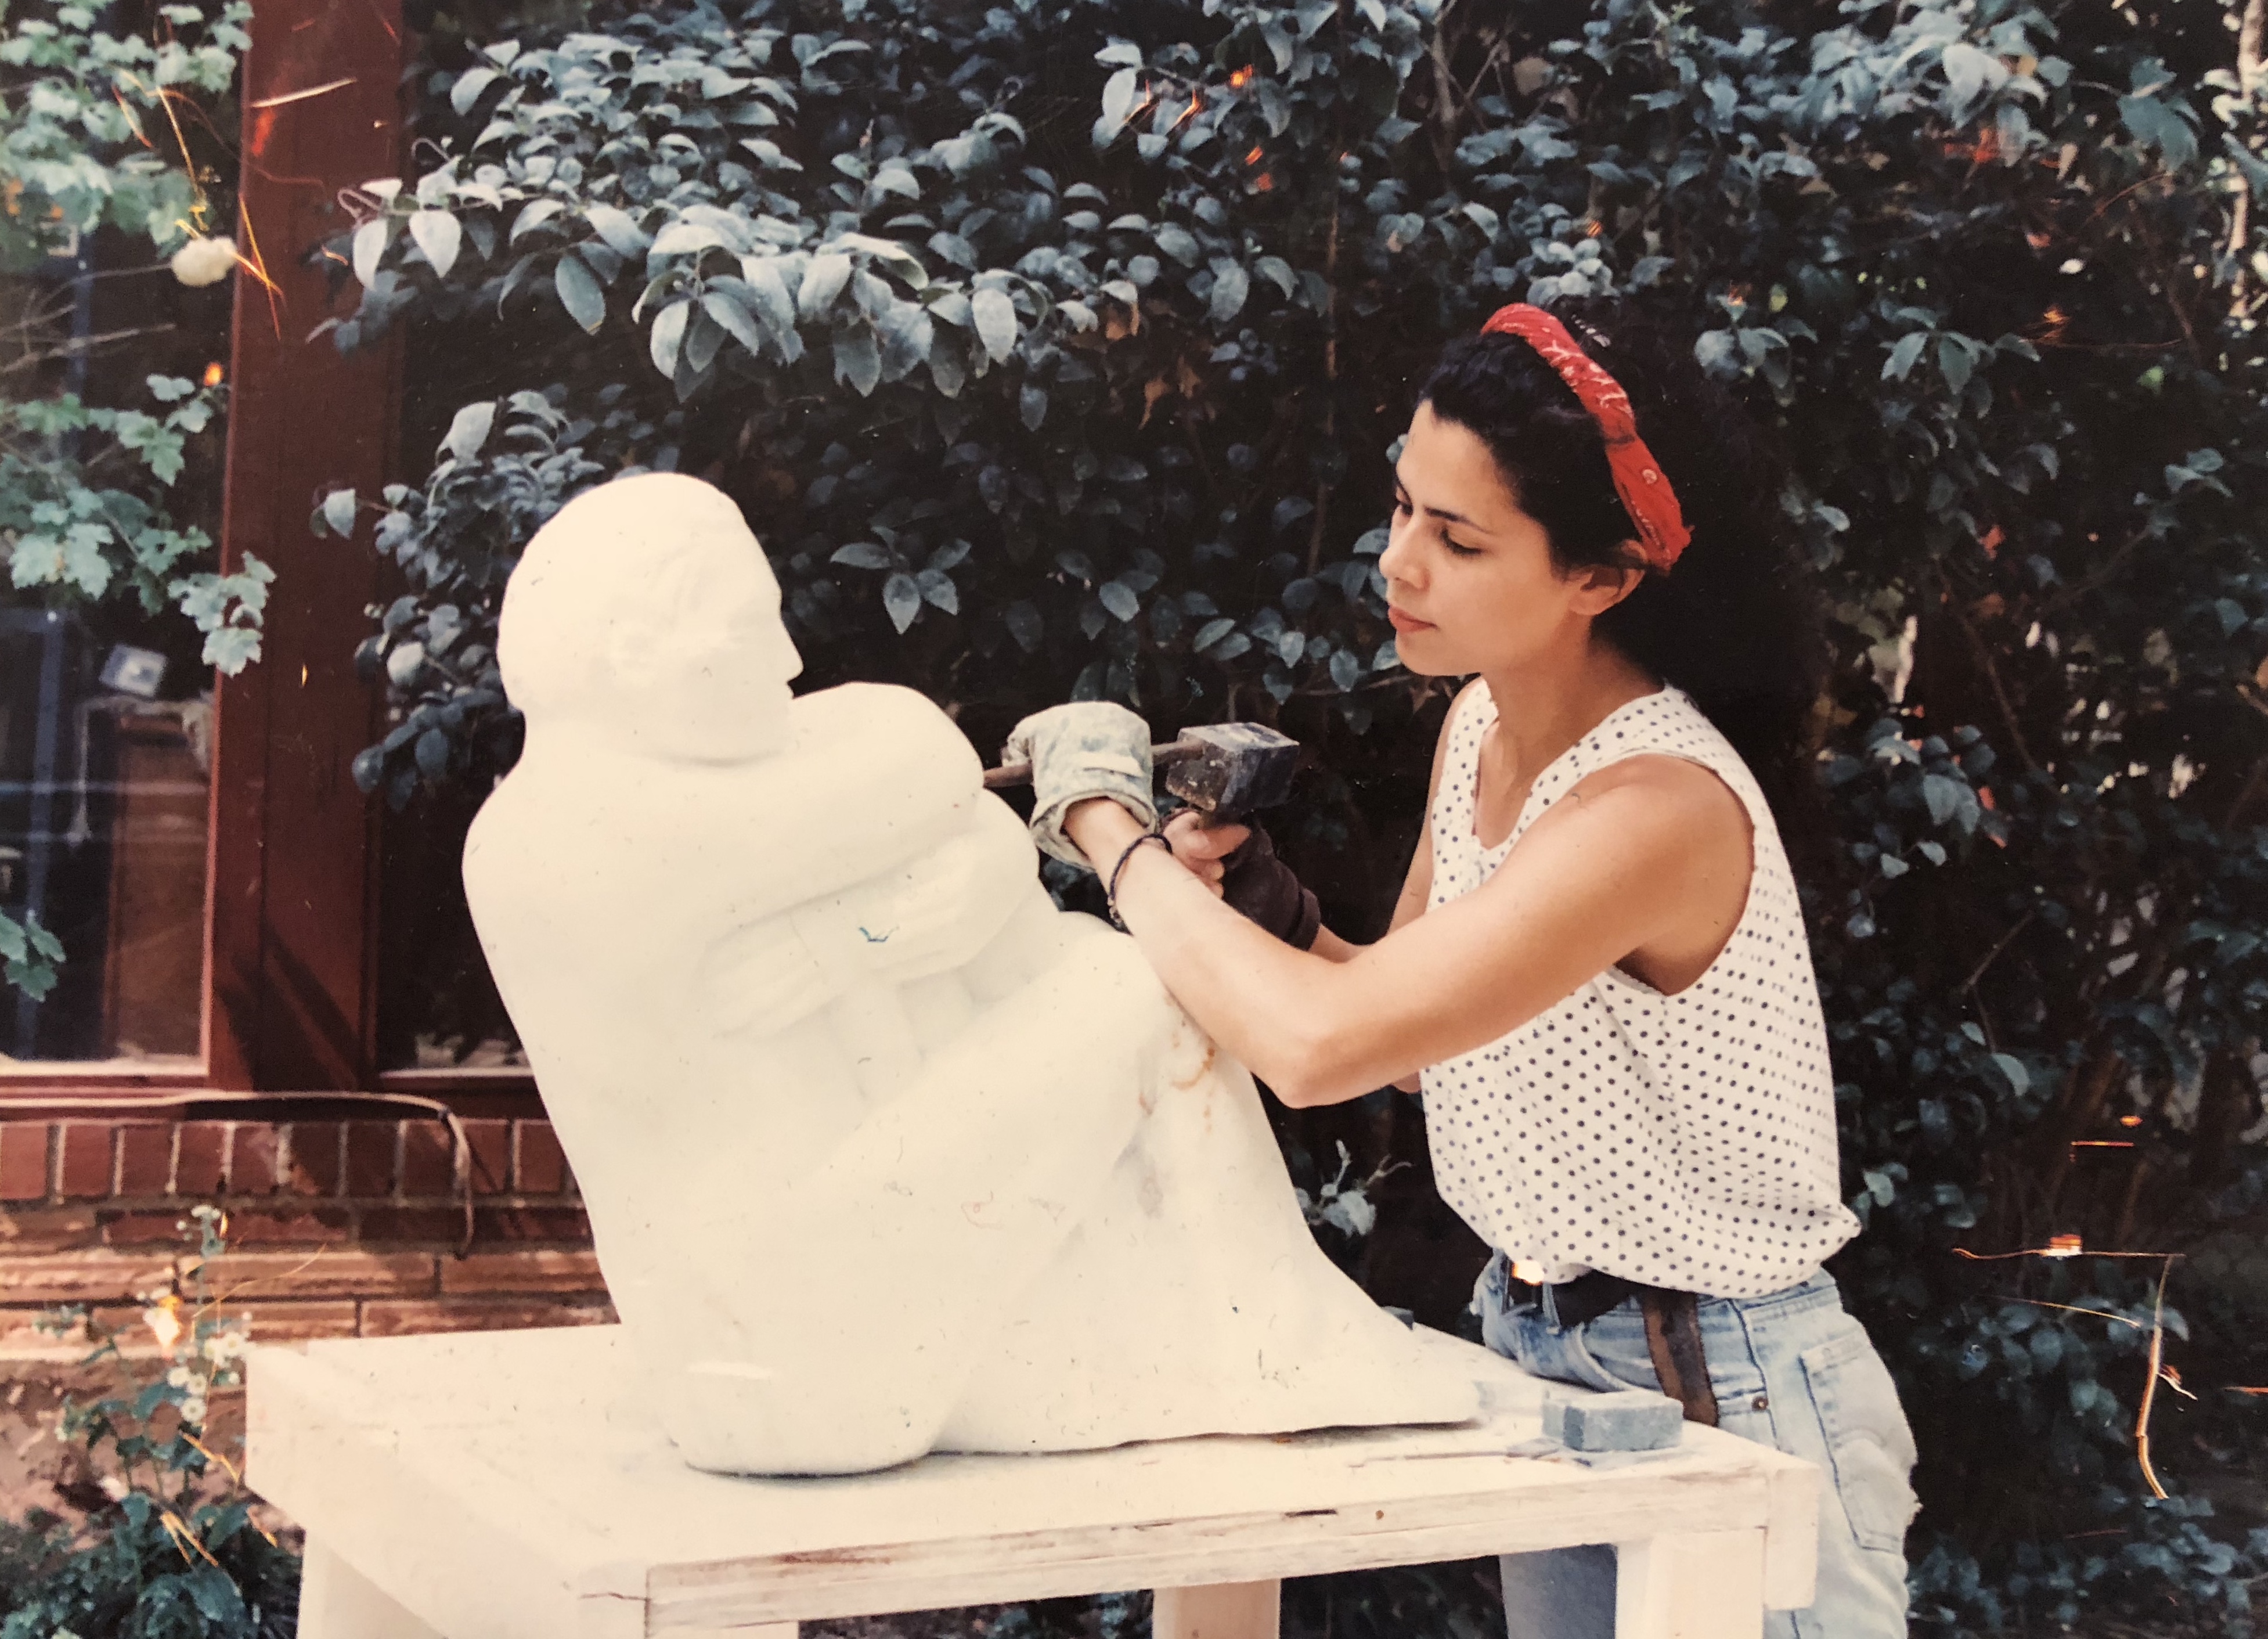 Alexandra de joven en Italia trabajando la piedra